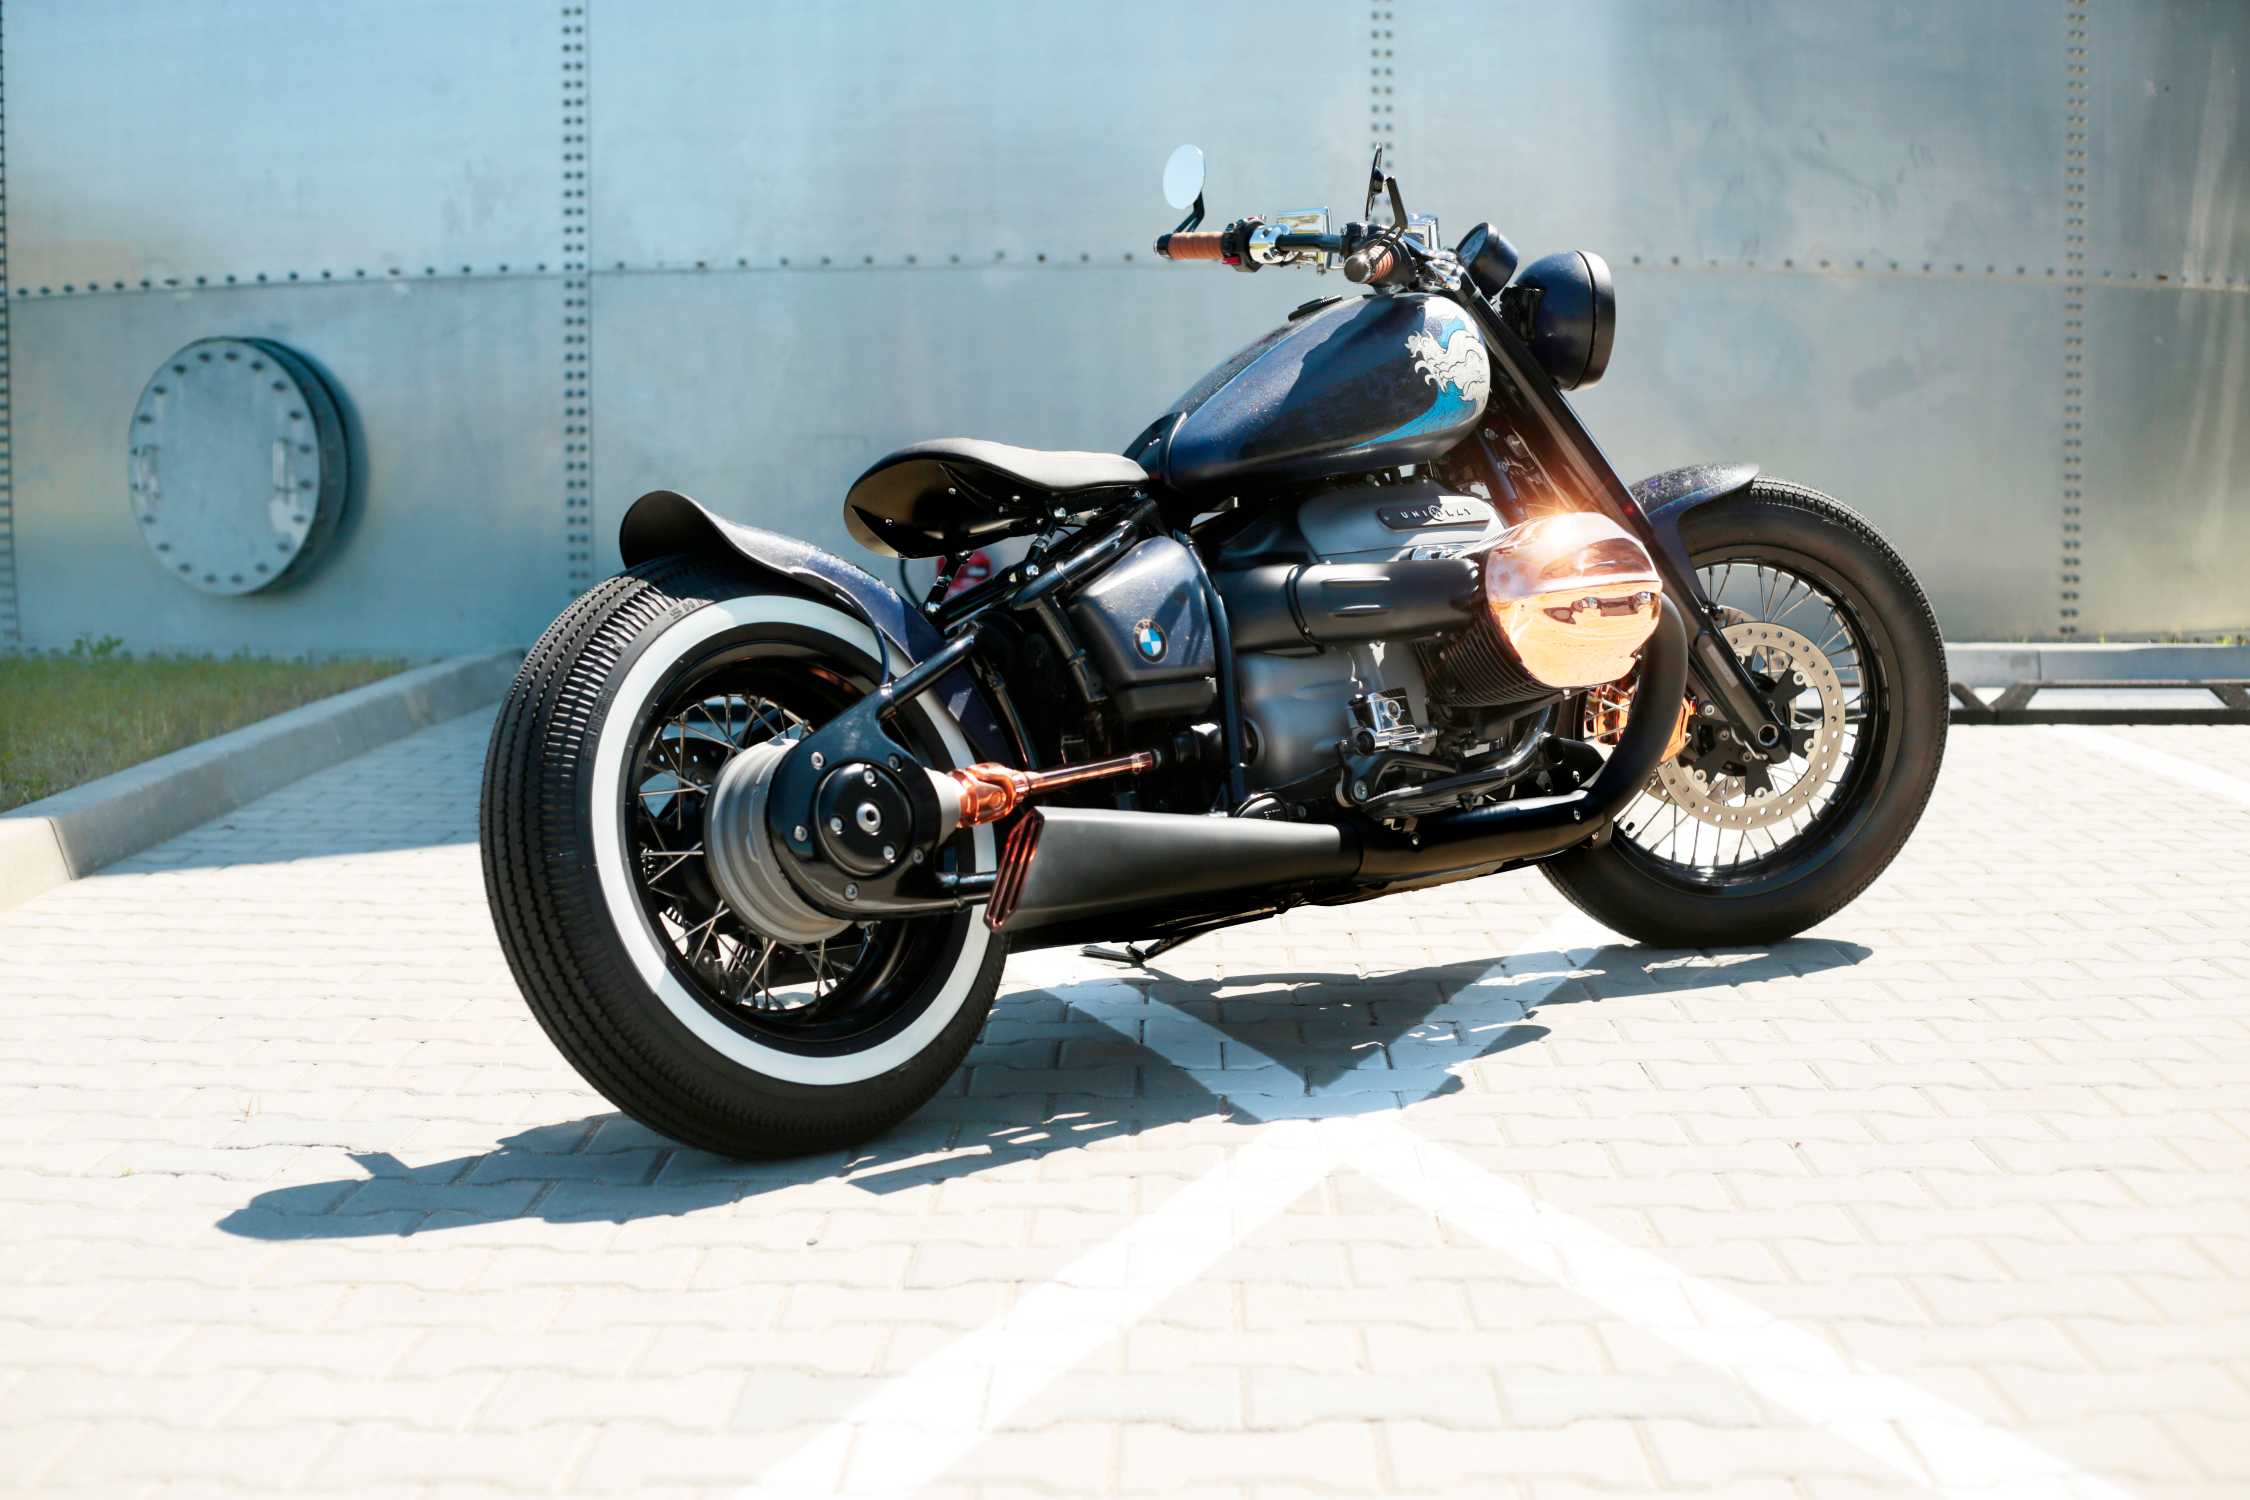 BMW Motorrad Presents the New S 1000 XR in Brown Motor Works